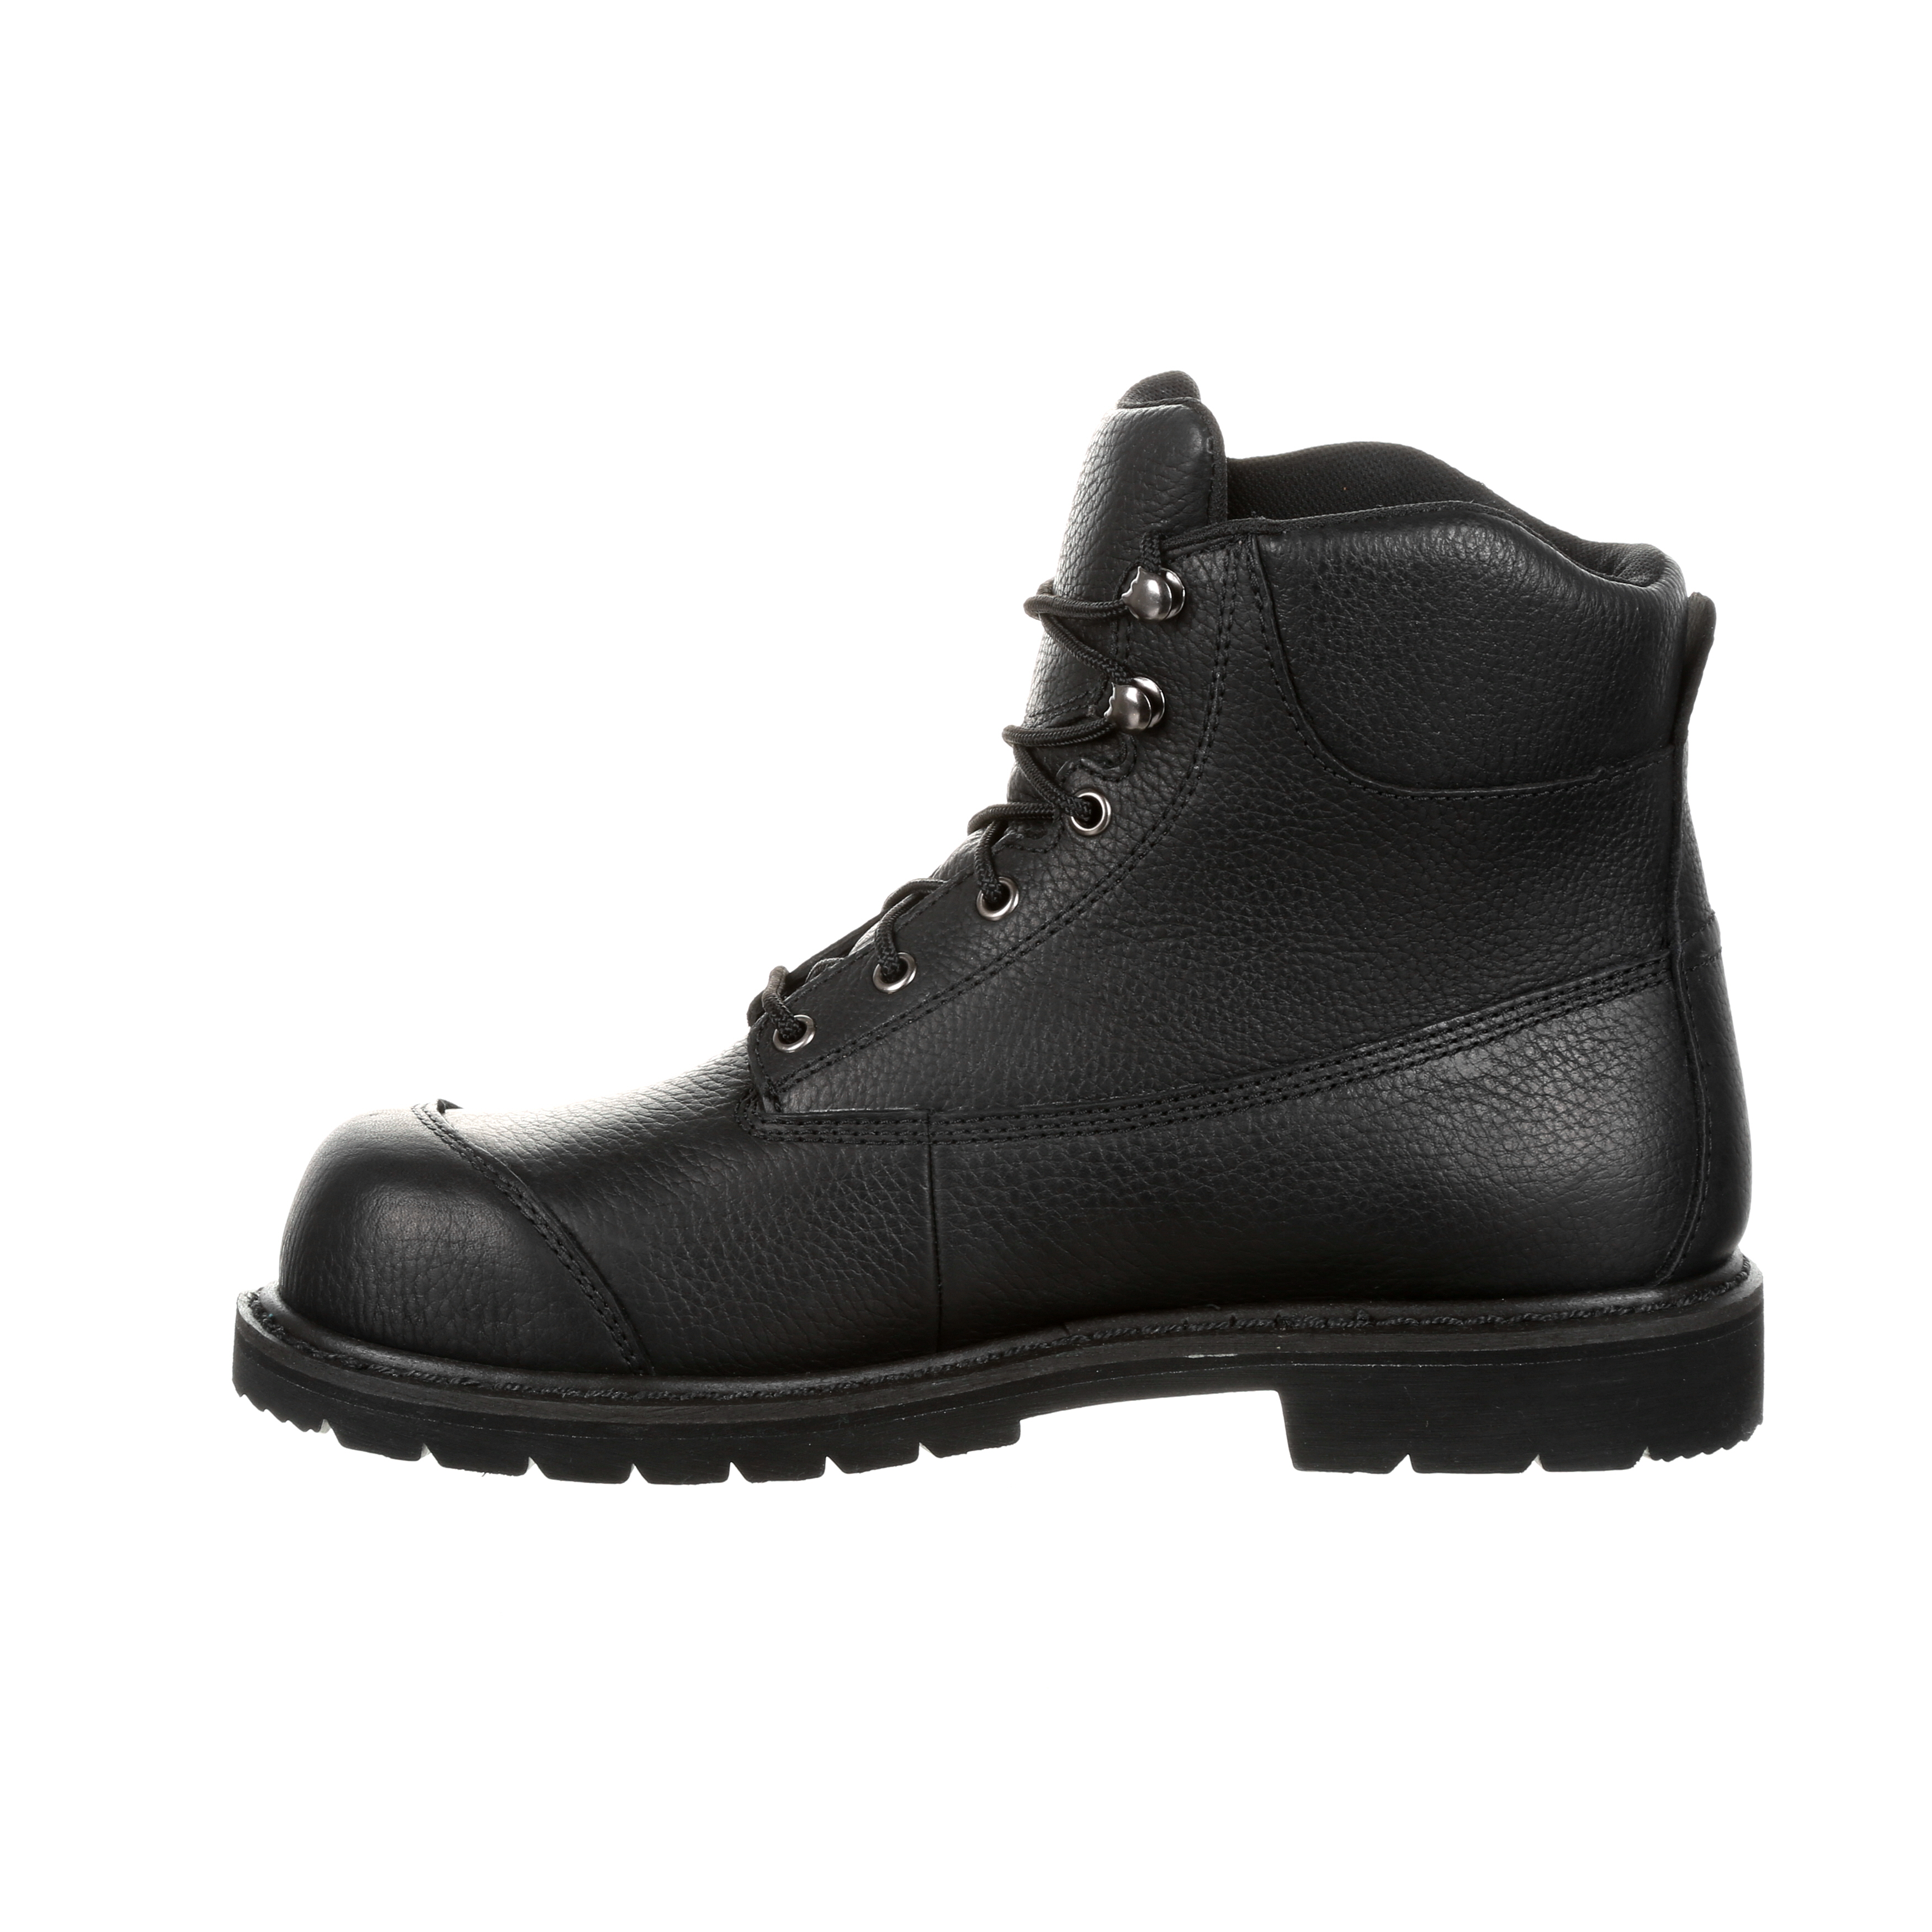 Lehigh Safety Shoes Unisex 6 inch Steel Toe Waterproof Work Boot, LEHI065IA